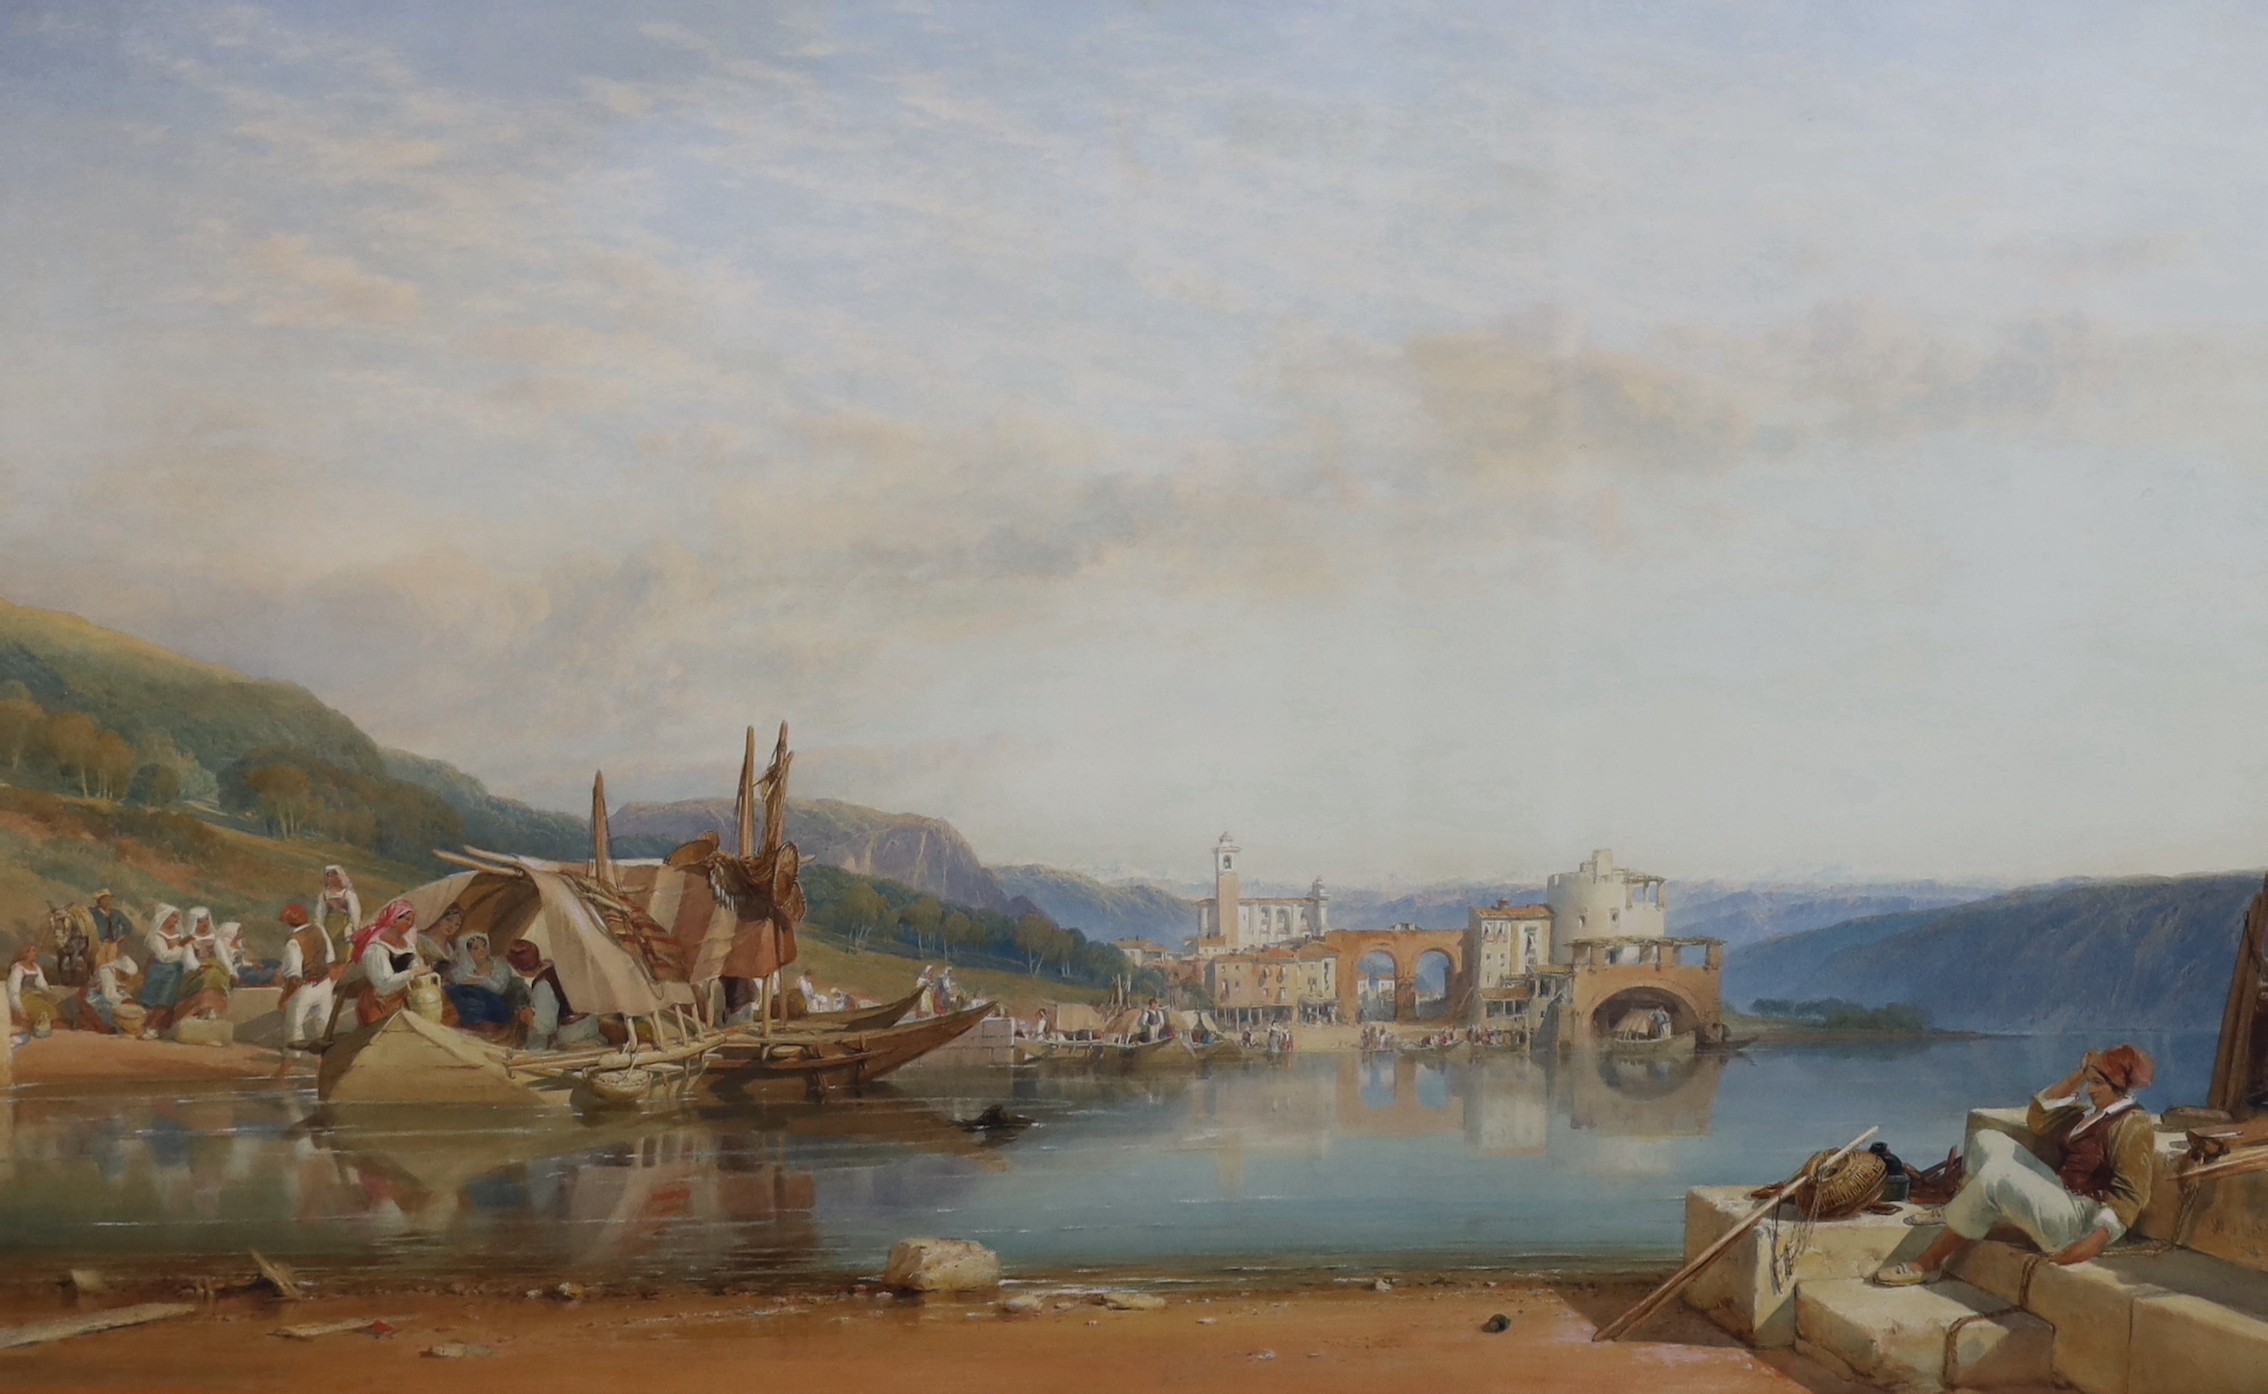 William Leighton Leitch RI (British, 1804-1883), Lake Maggiore, Northern Italy, 1866, watercolour, 58 x 92cm